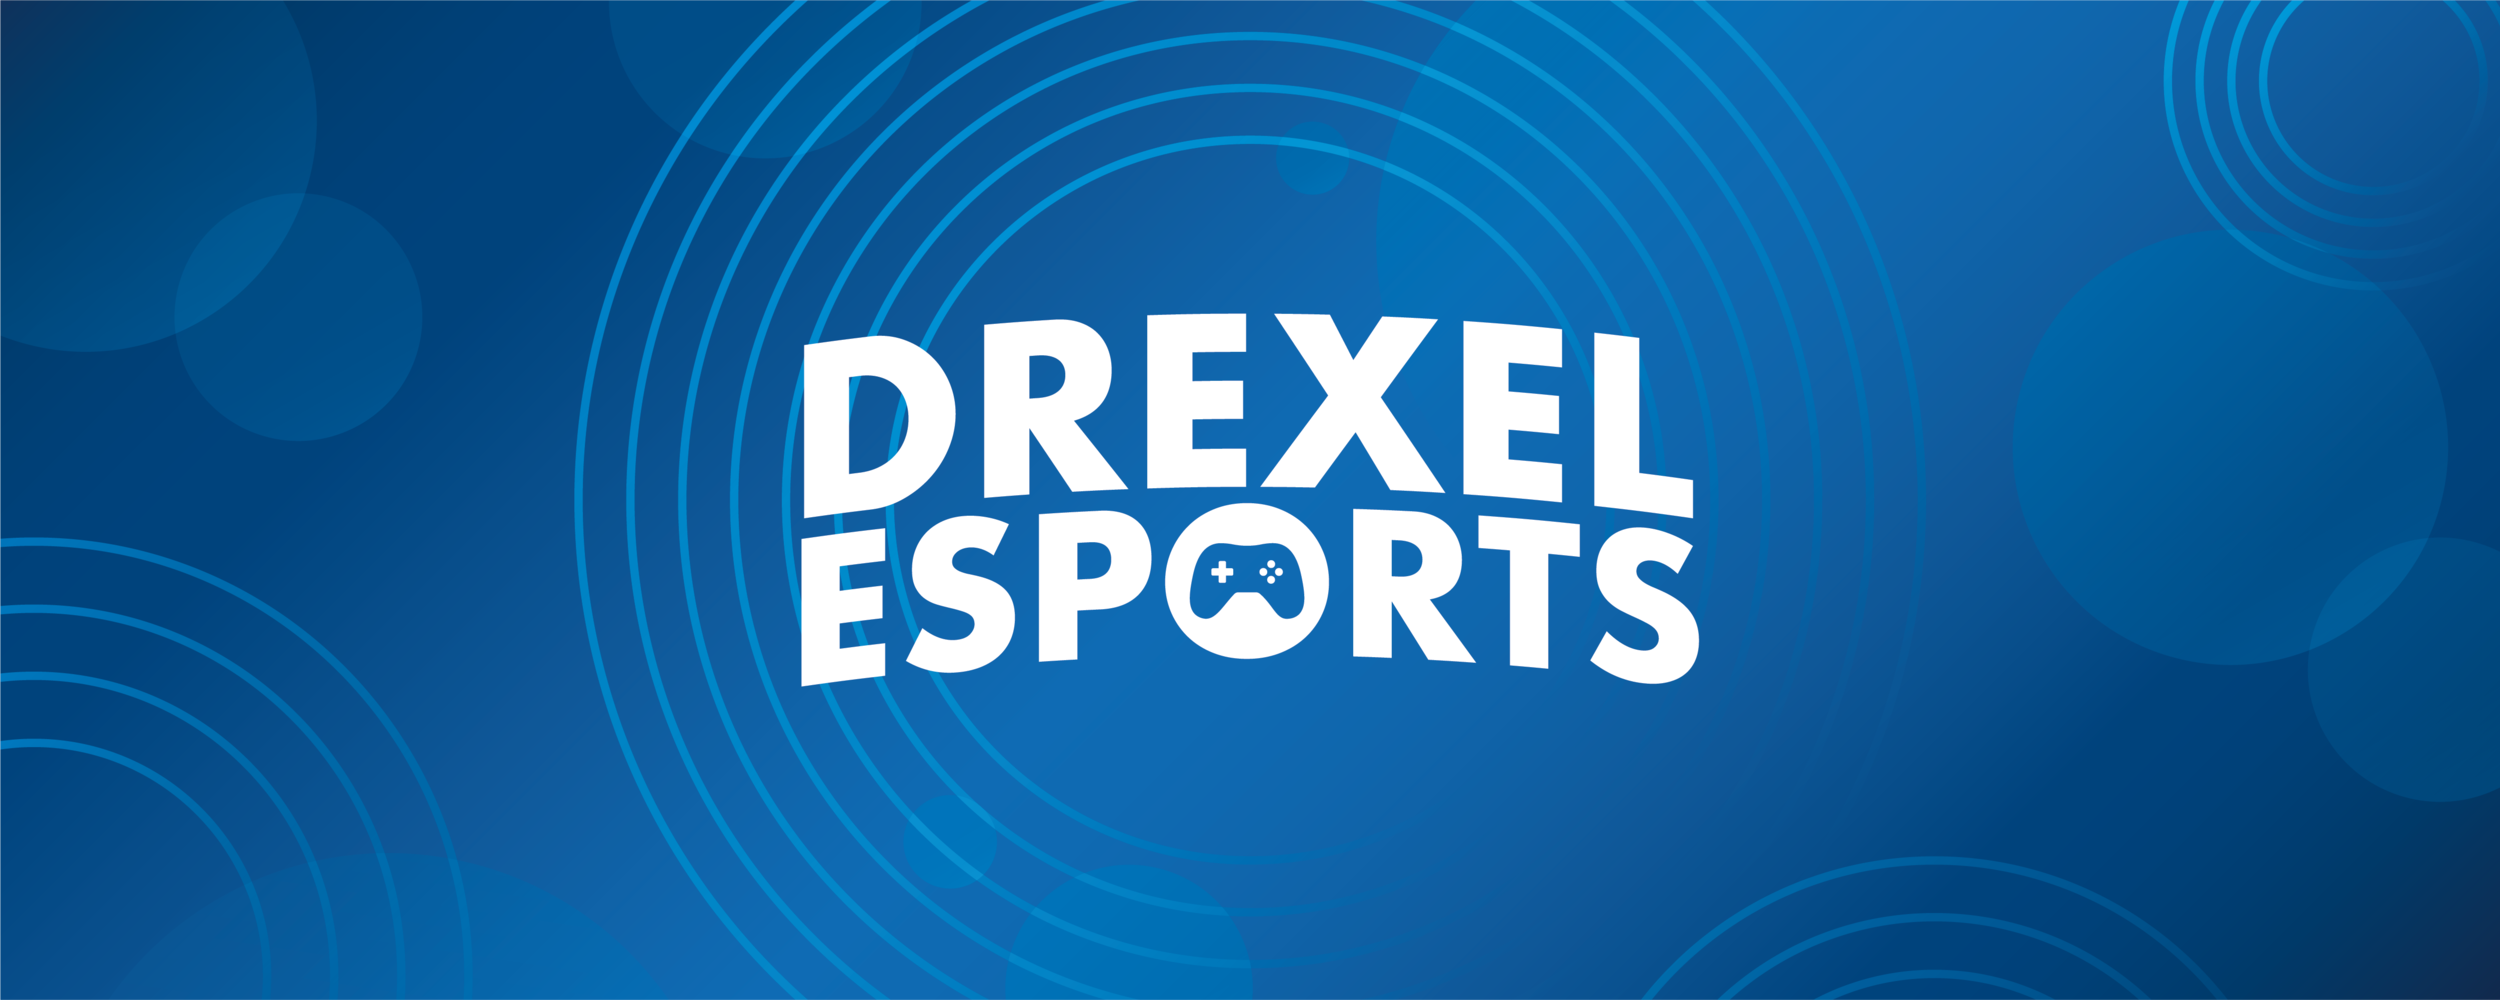 Drexel_ESports-Banner.png